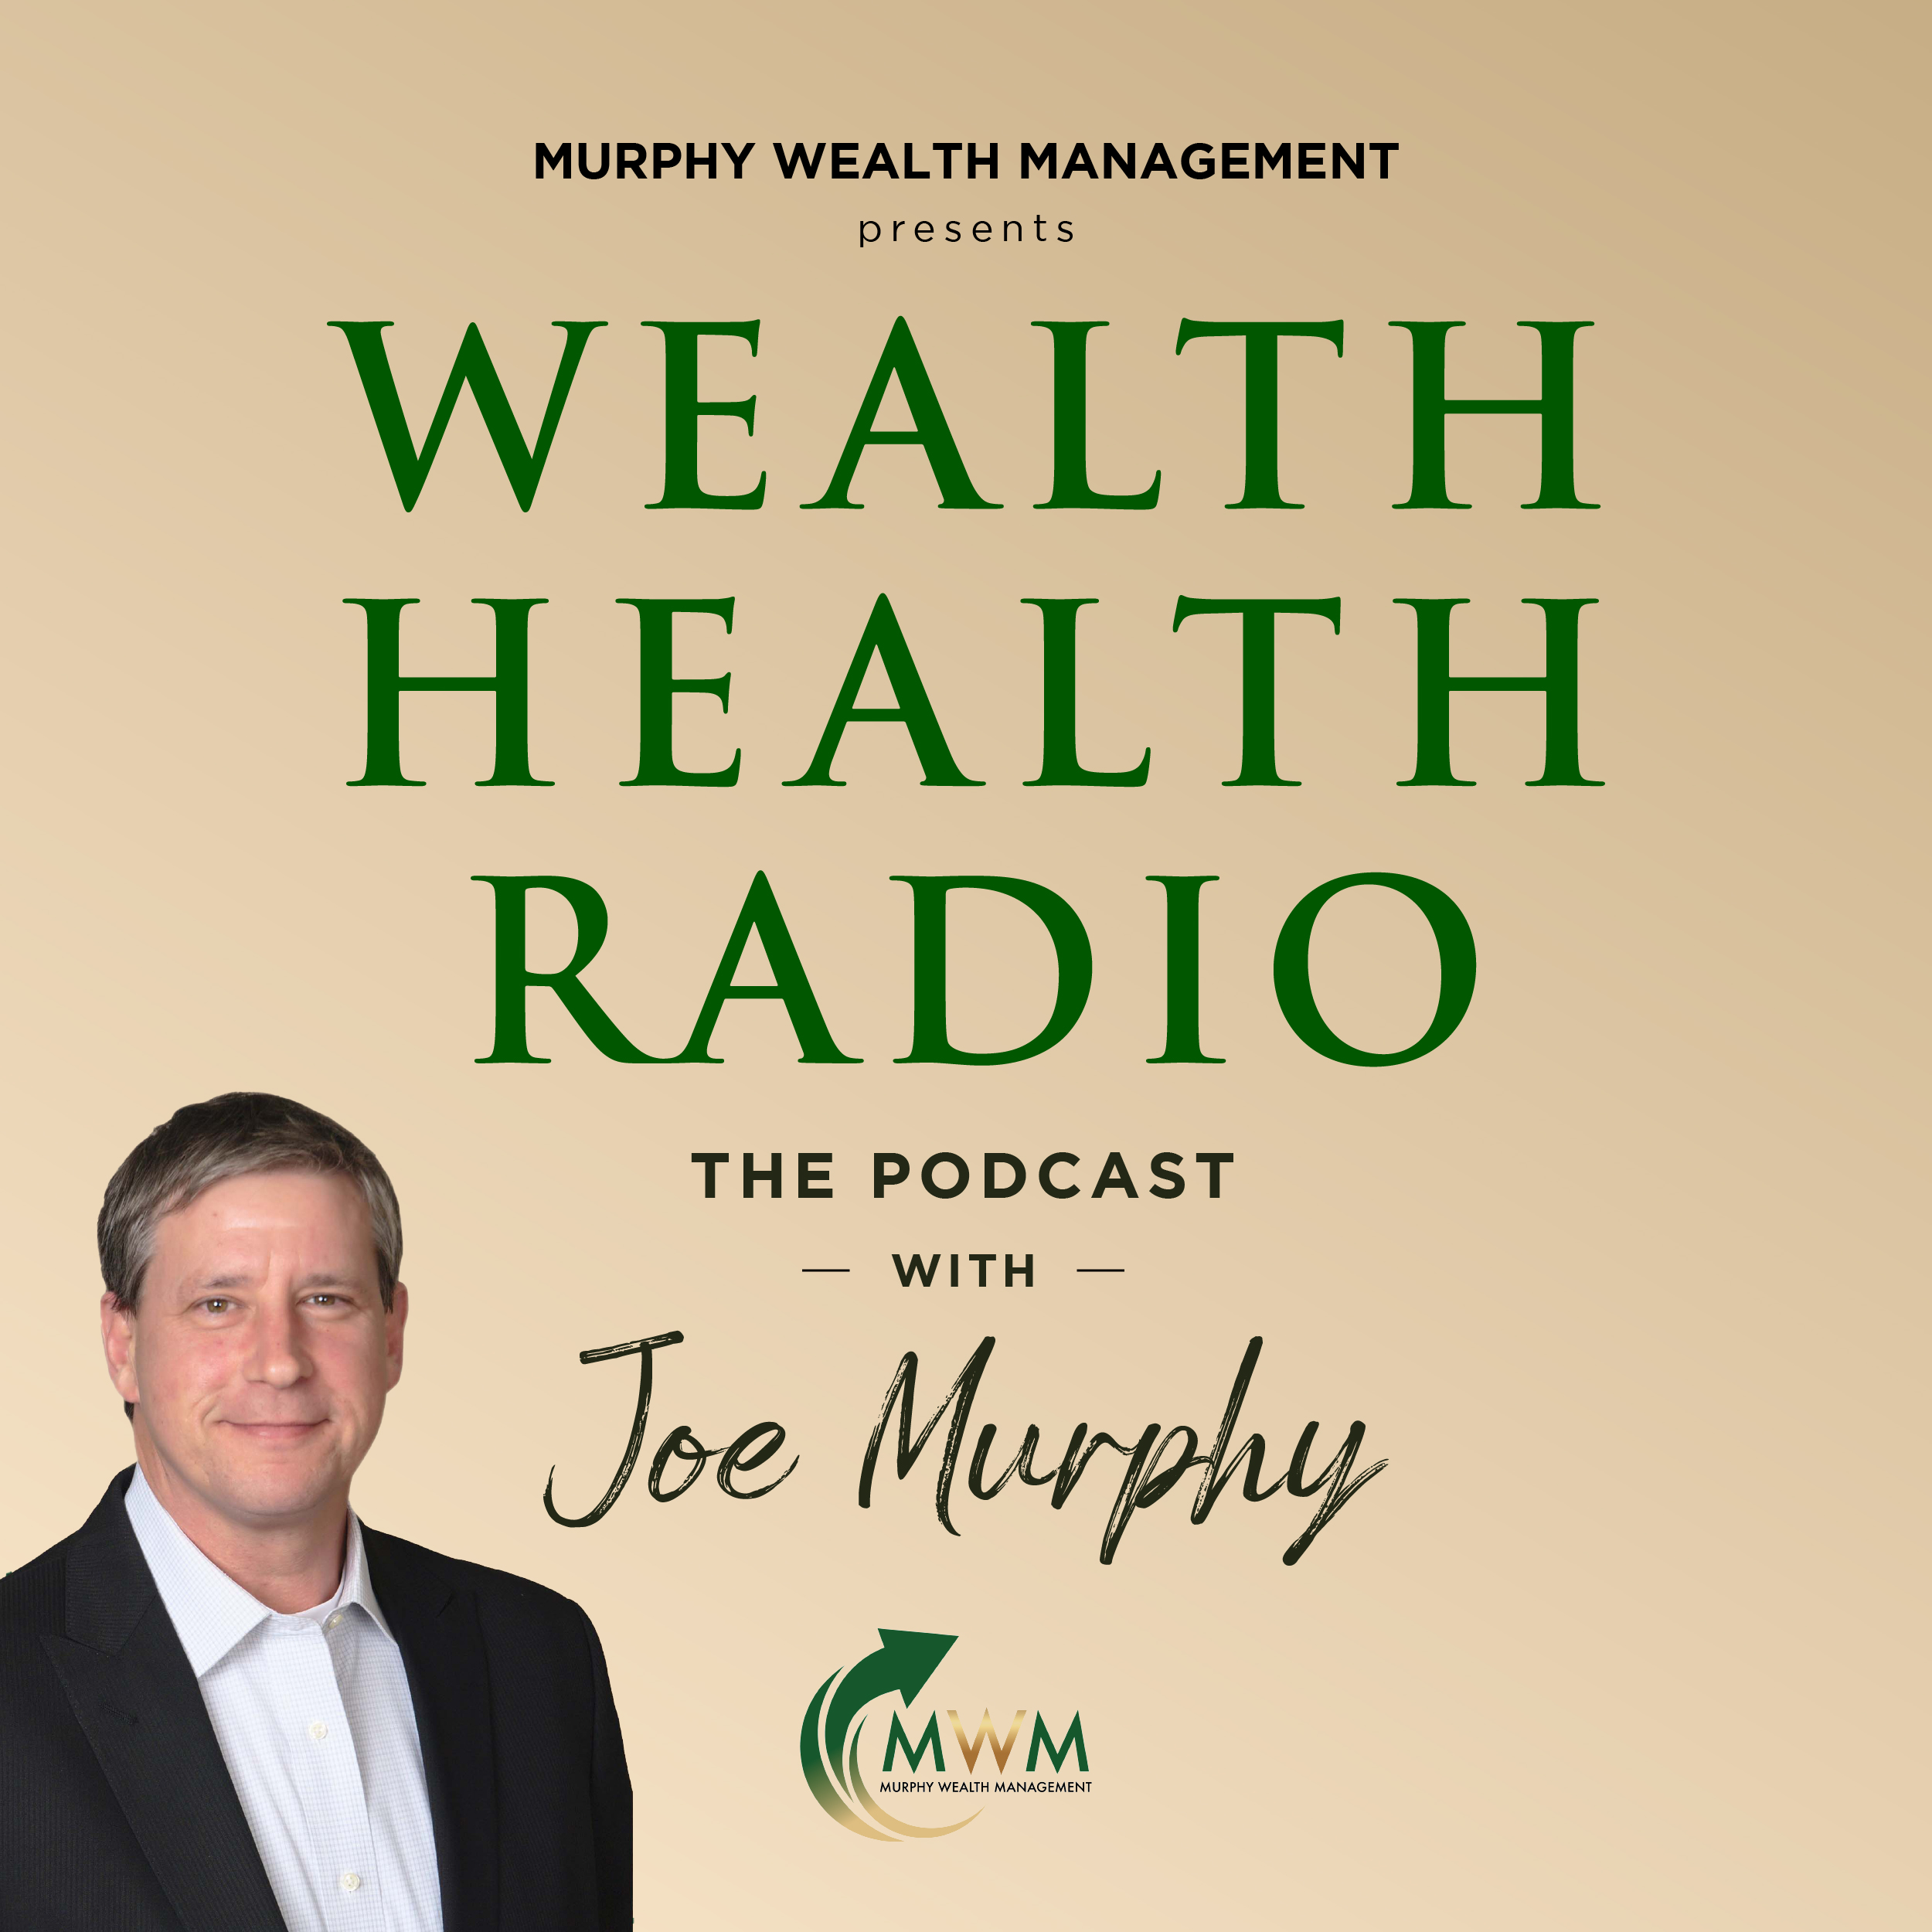 Joe Murphy discusses the five critical pillars of retirement planning.